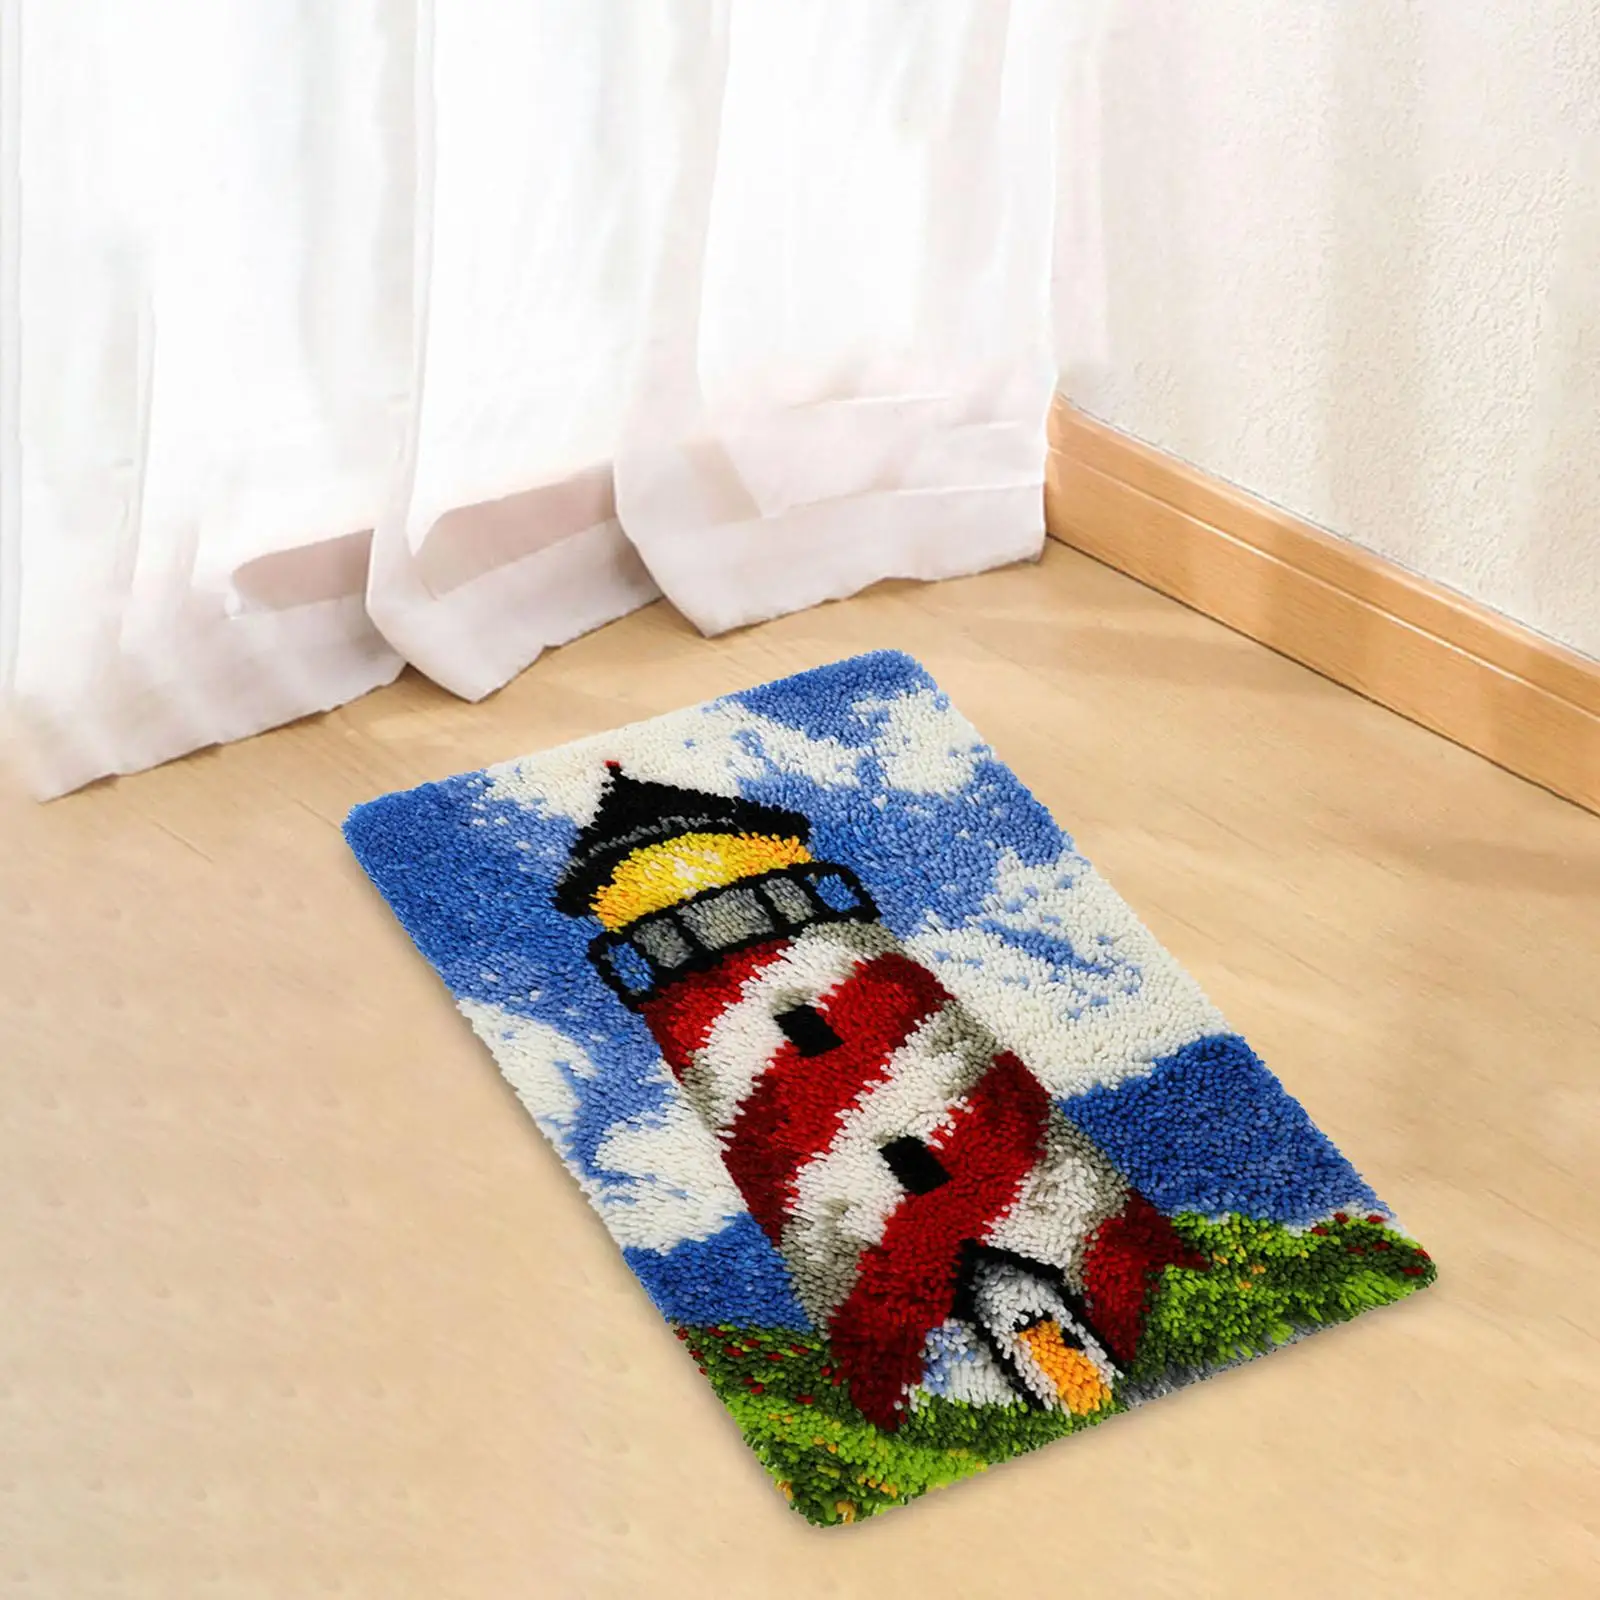 Latch DIY Rug Making Kit Embroidery Handmade Carpet Set for Home Decor Carpet Adults